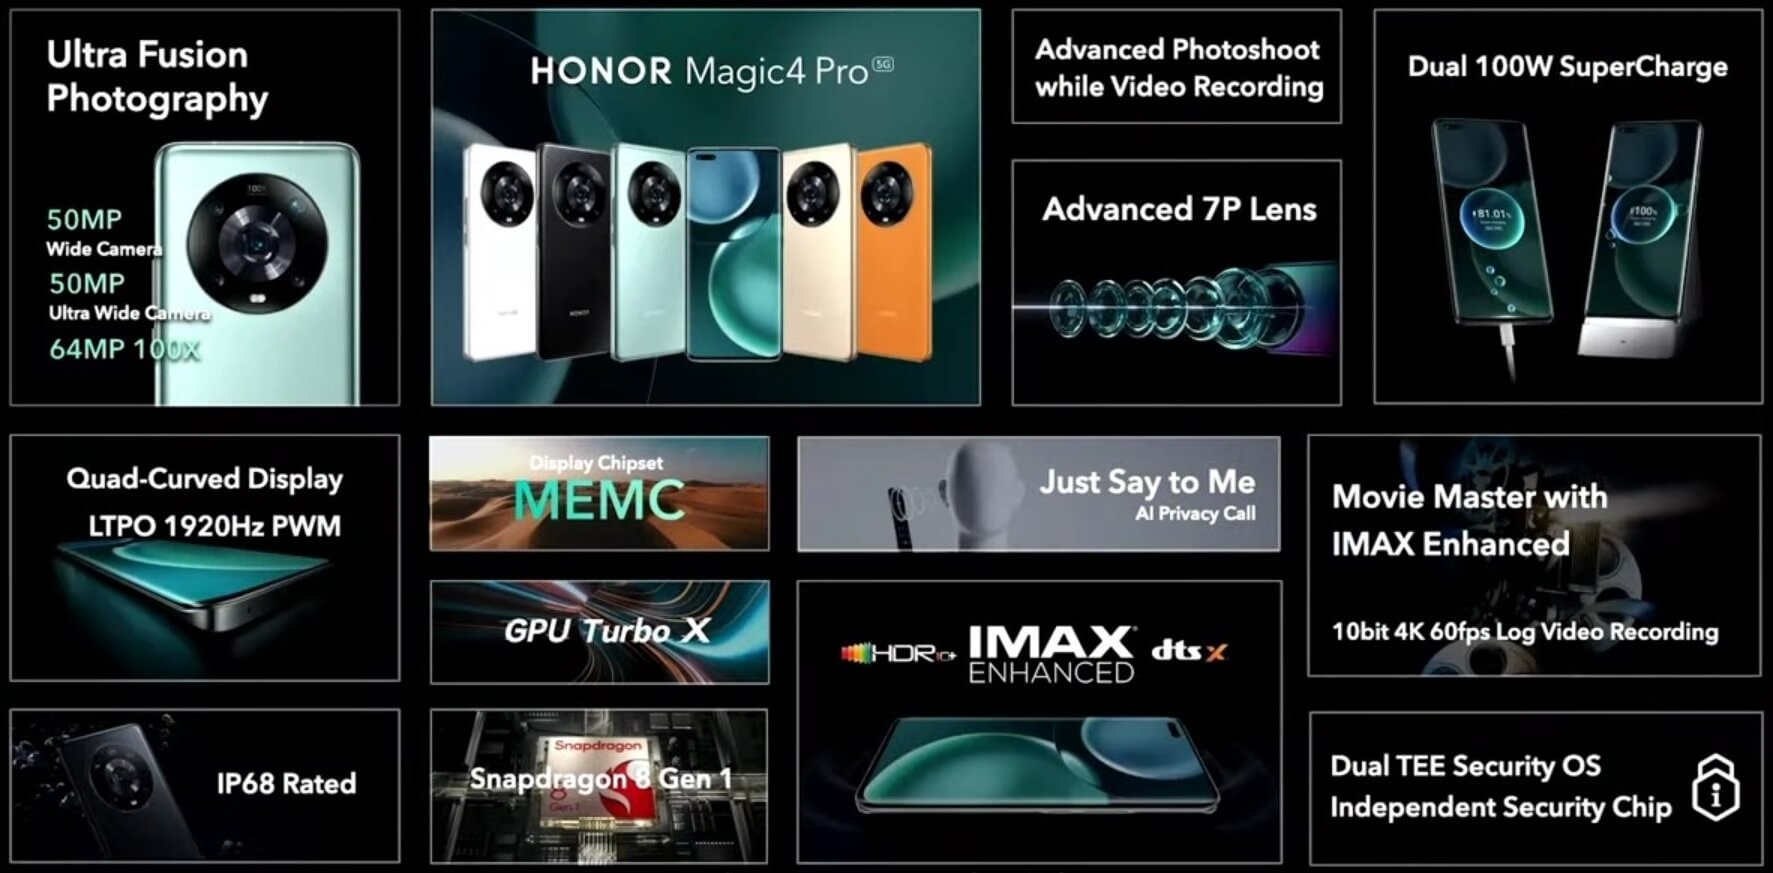 HONOR Magic 4 Pro features